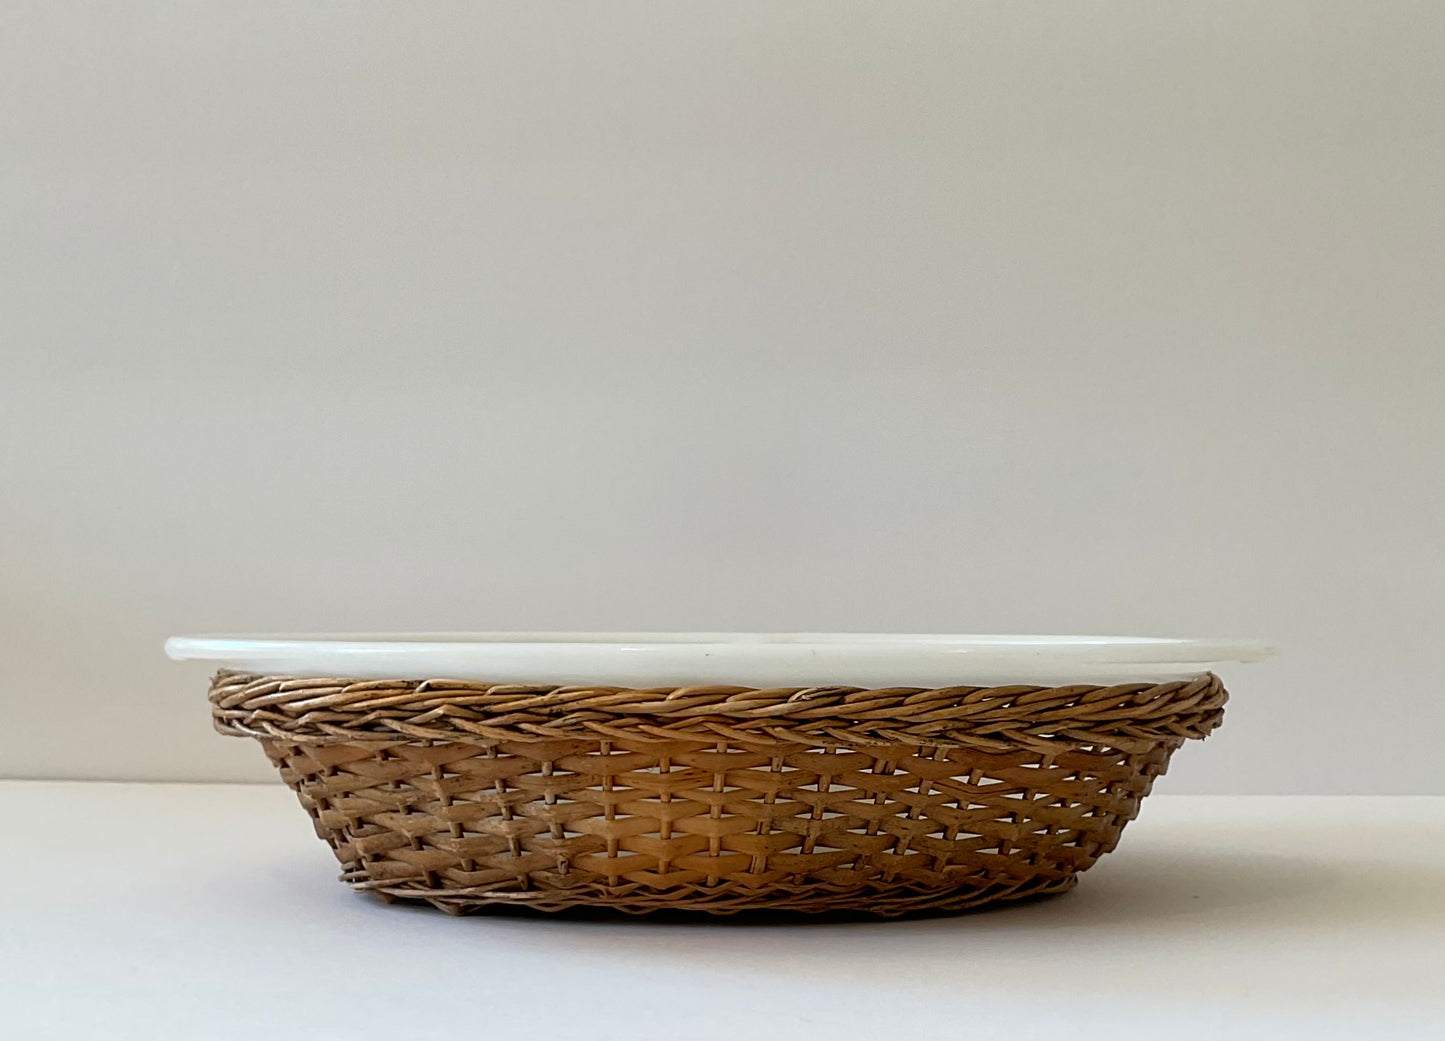 Vintage Glasbake Divided Casserole with Serving Basket Included